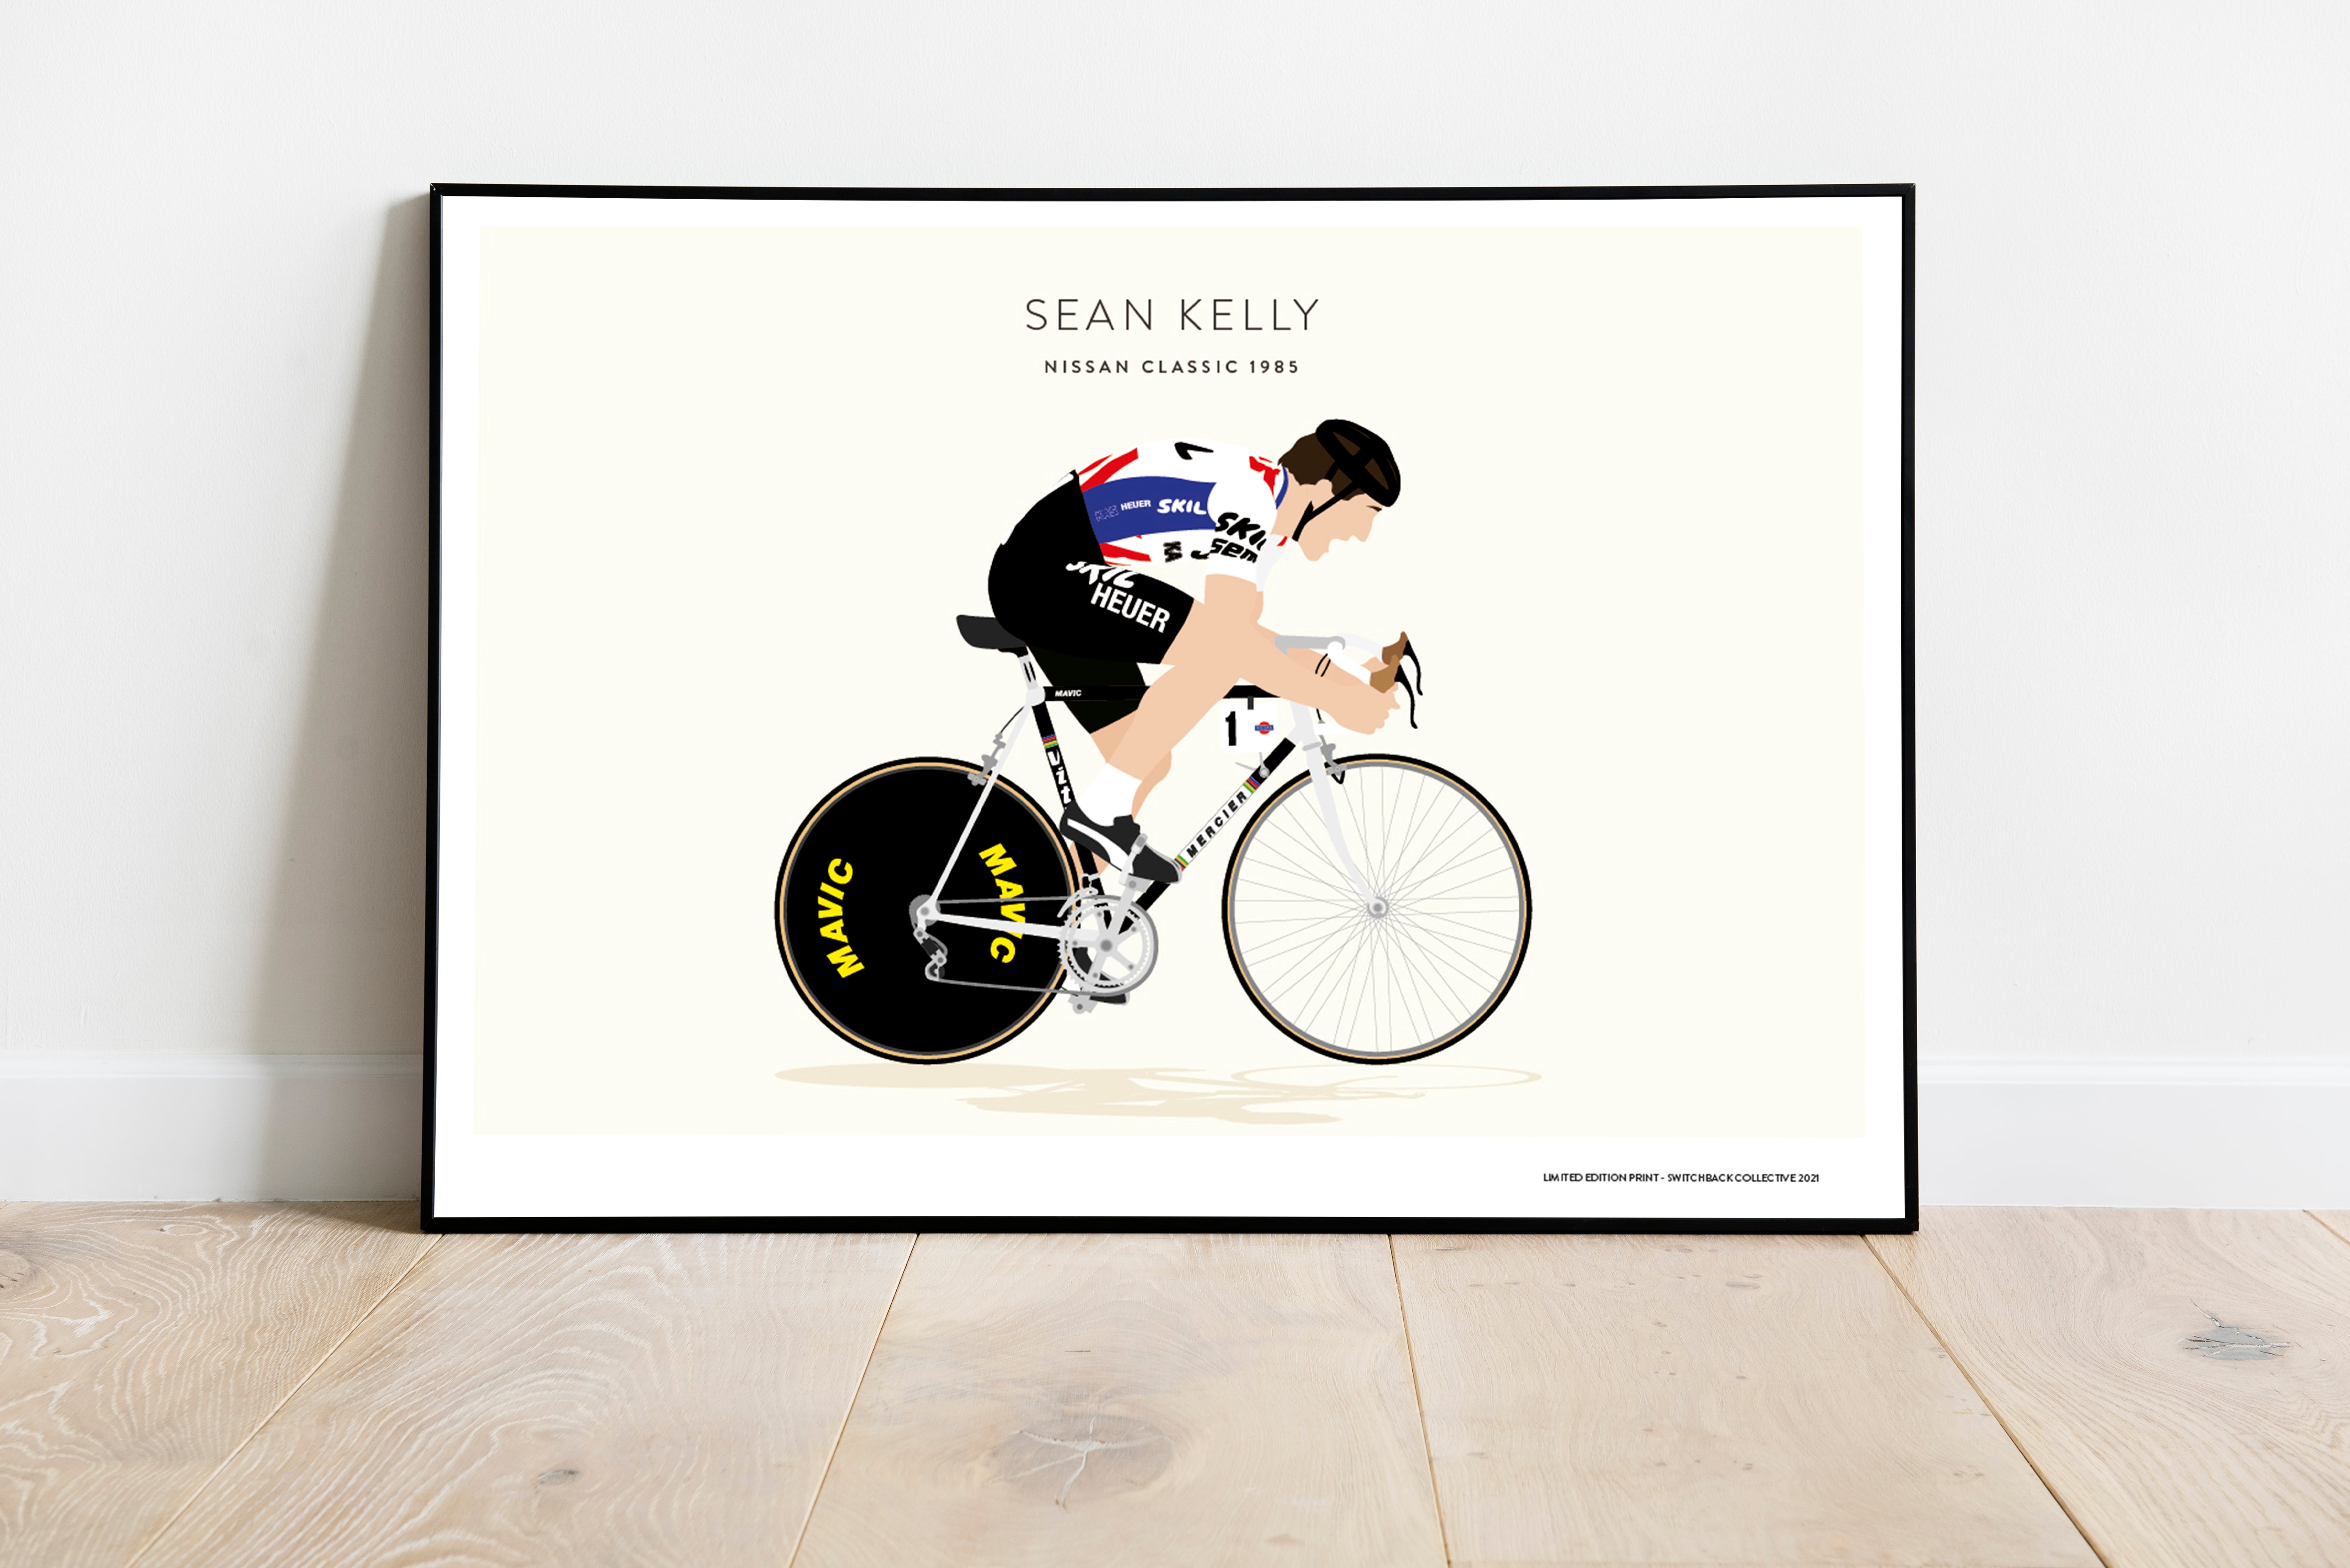 Sean Kelly 1985 Nissan Classic - Limited Edition Print